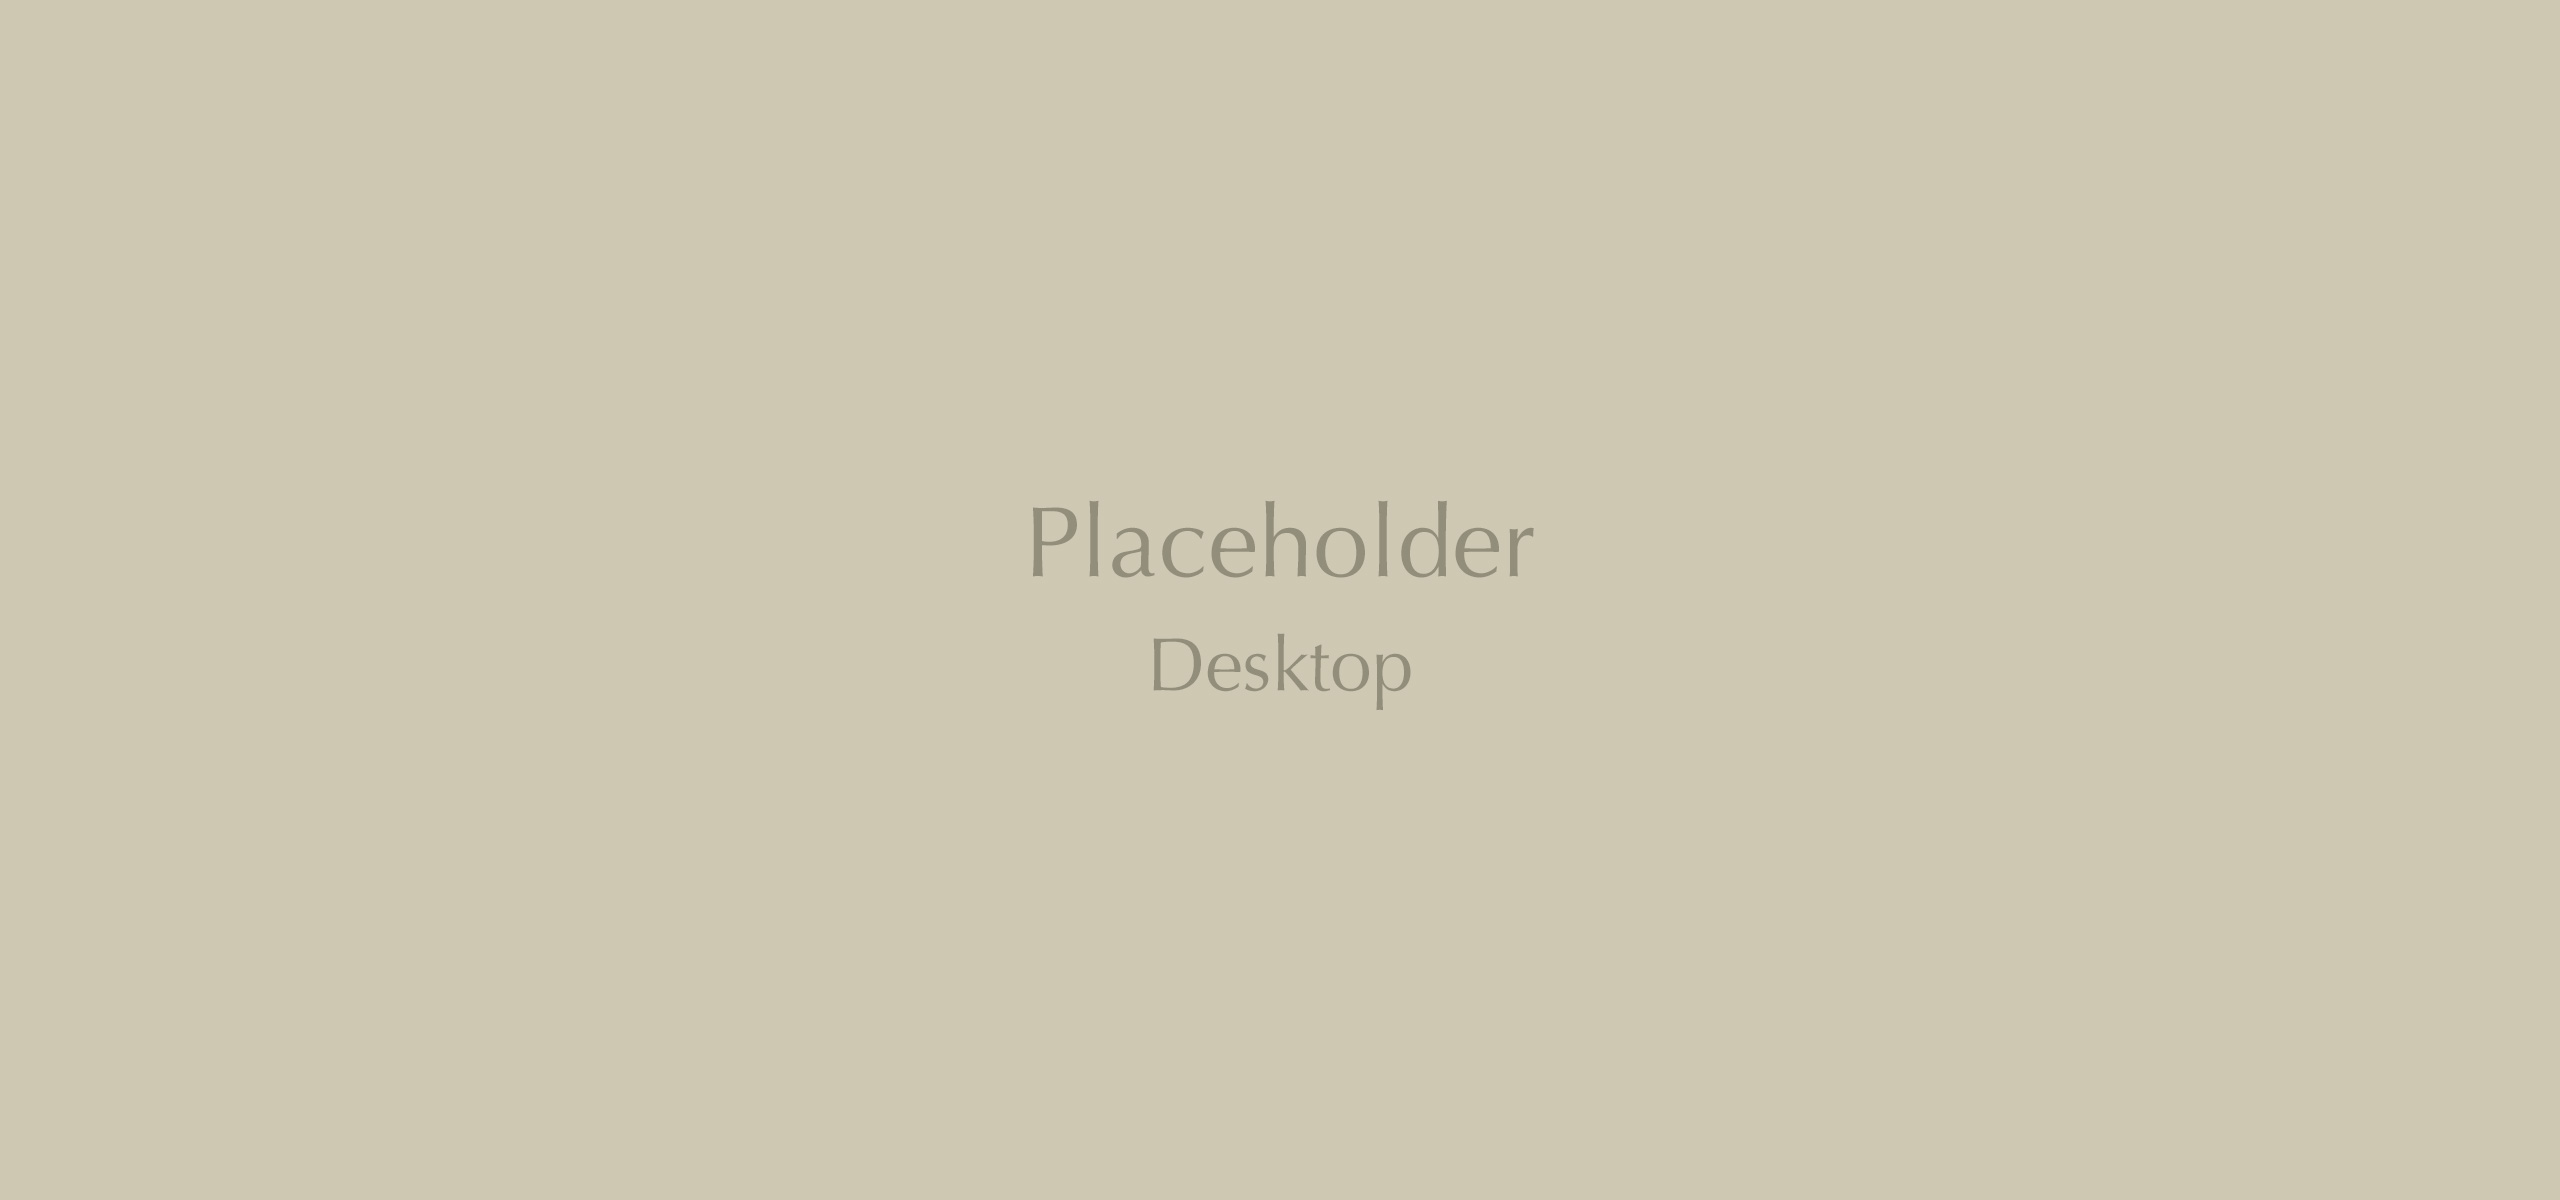 Placeholder.